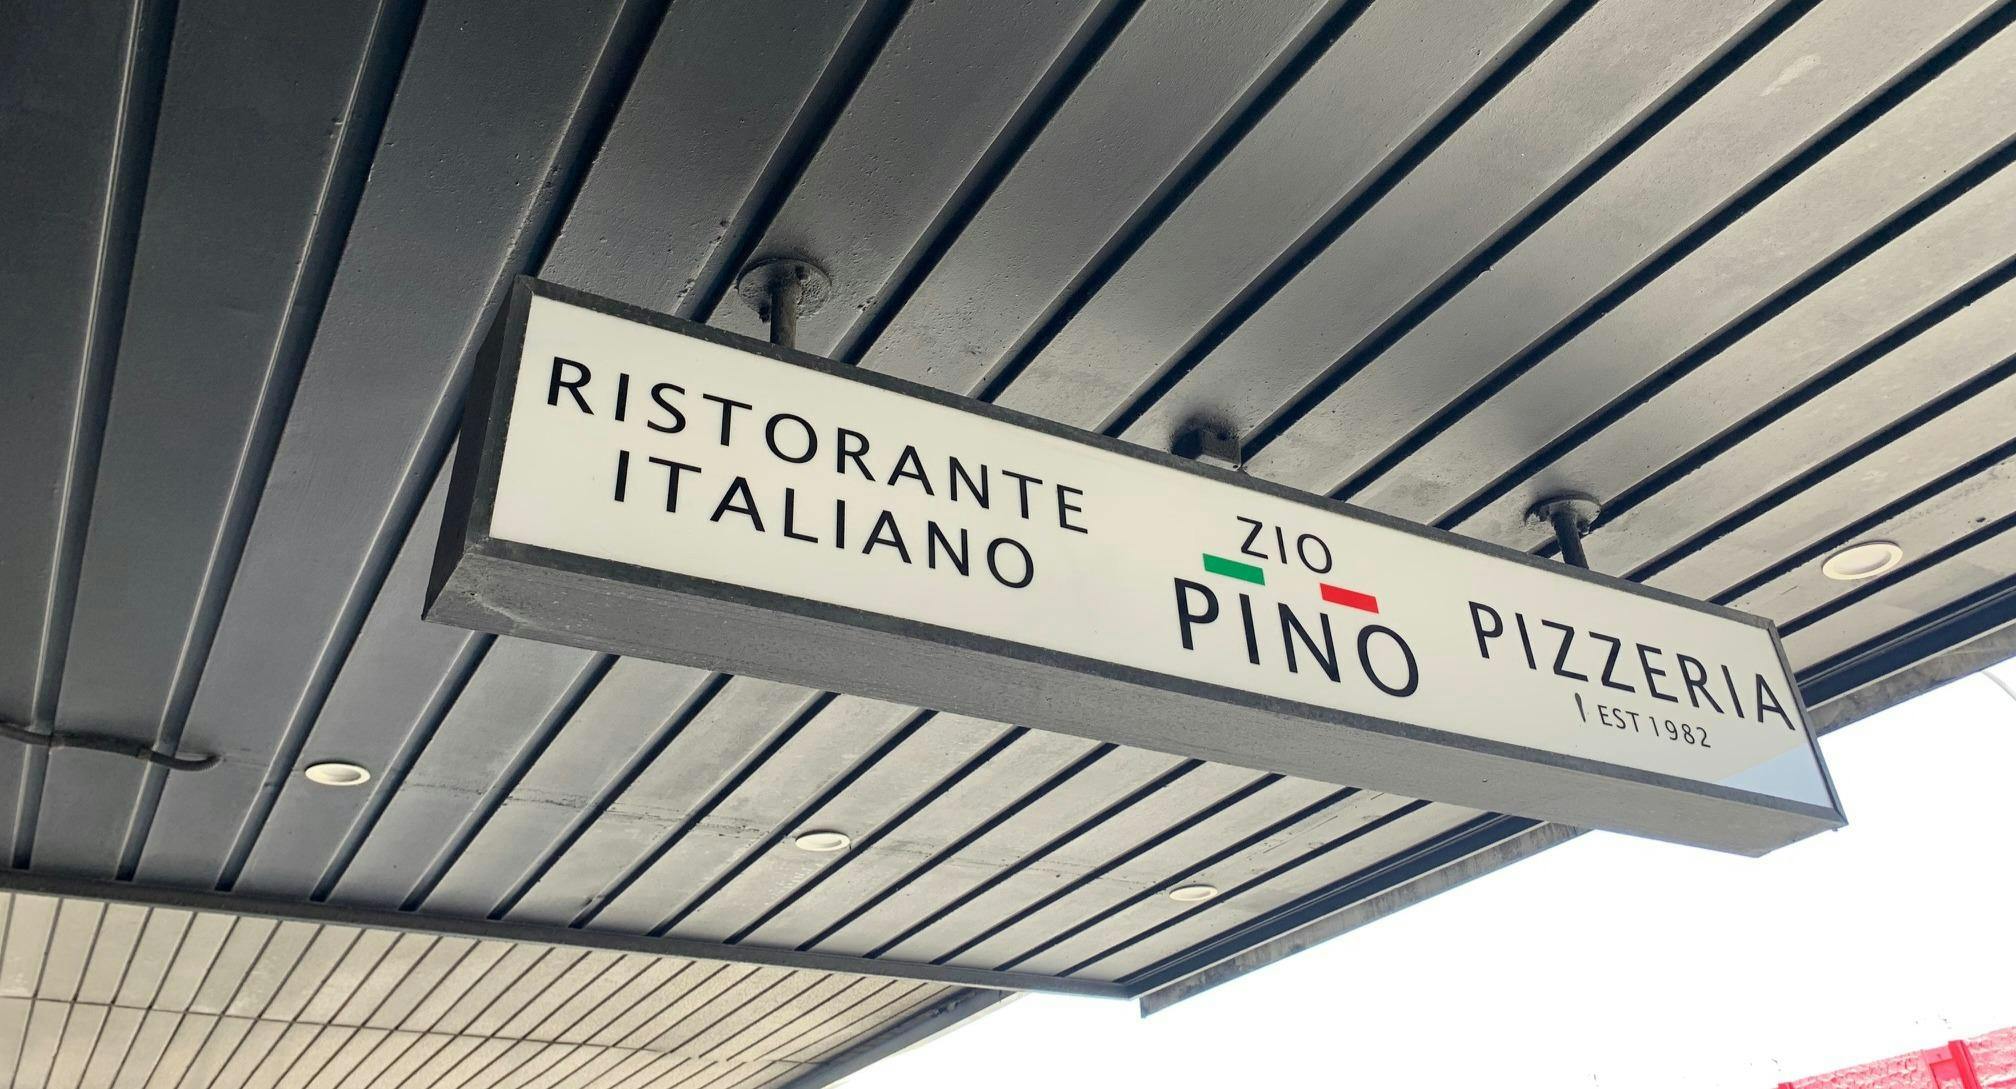 Photo of restaurant Zio Pino Pizzeria in Mascot, Sydney